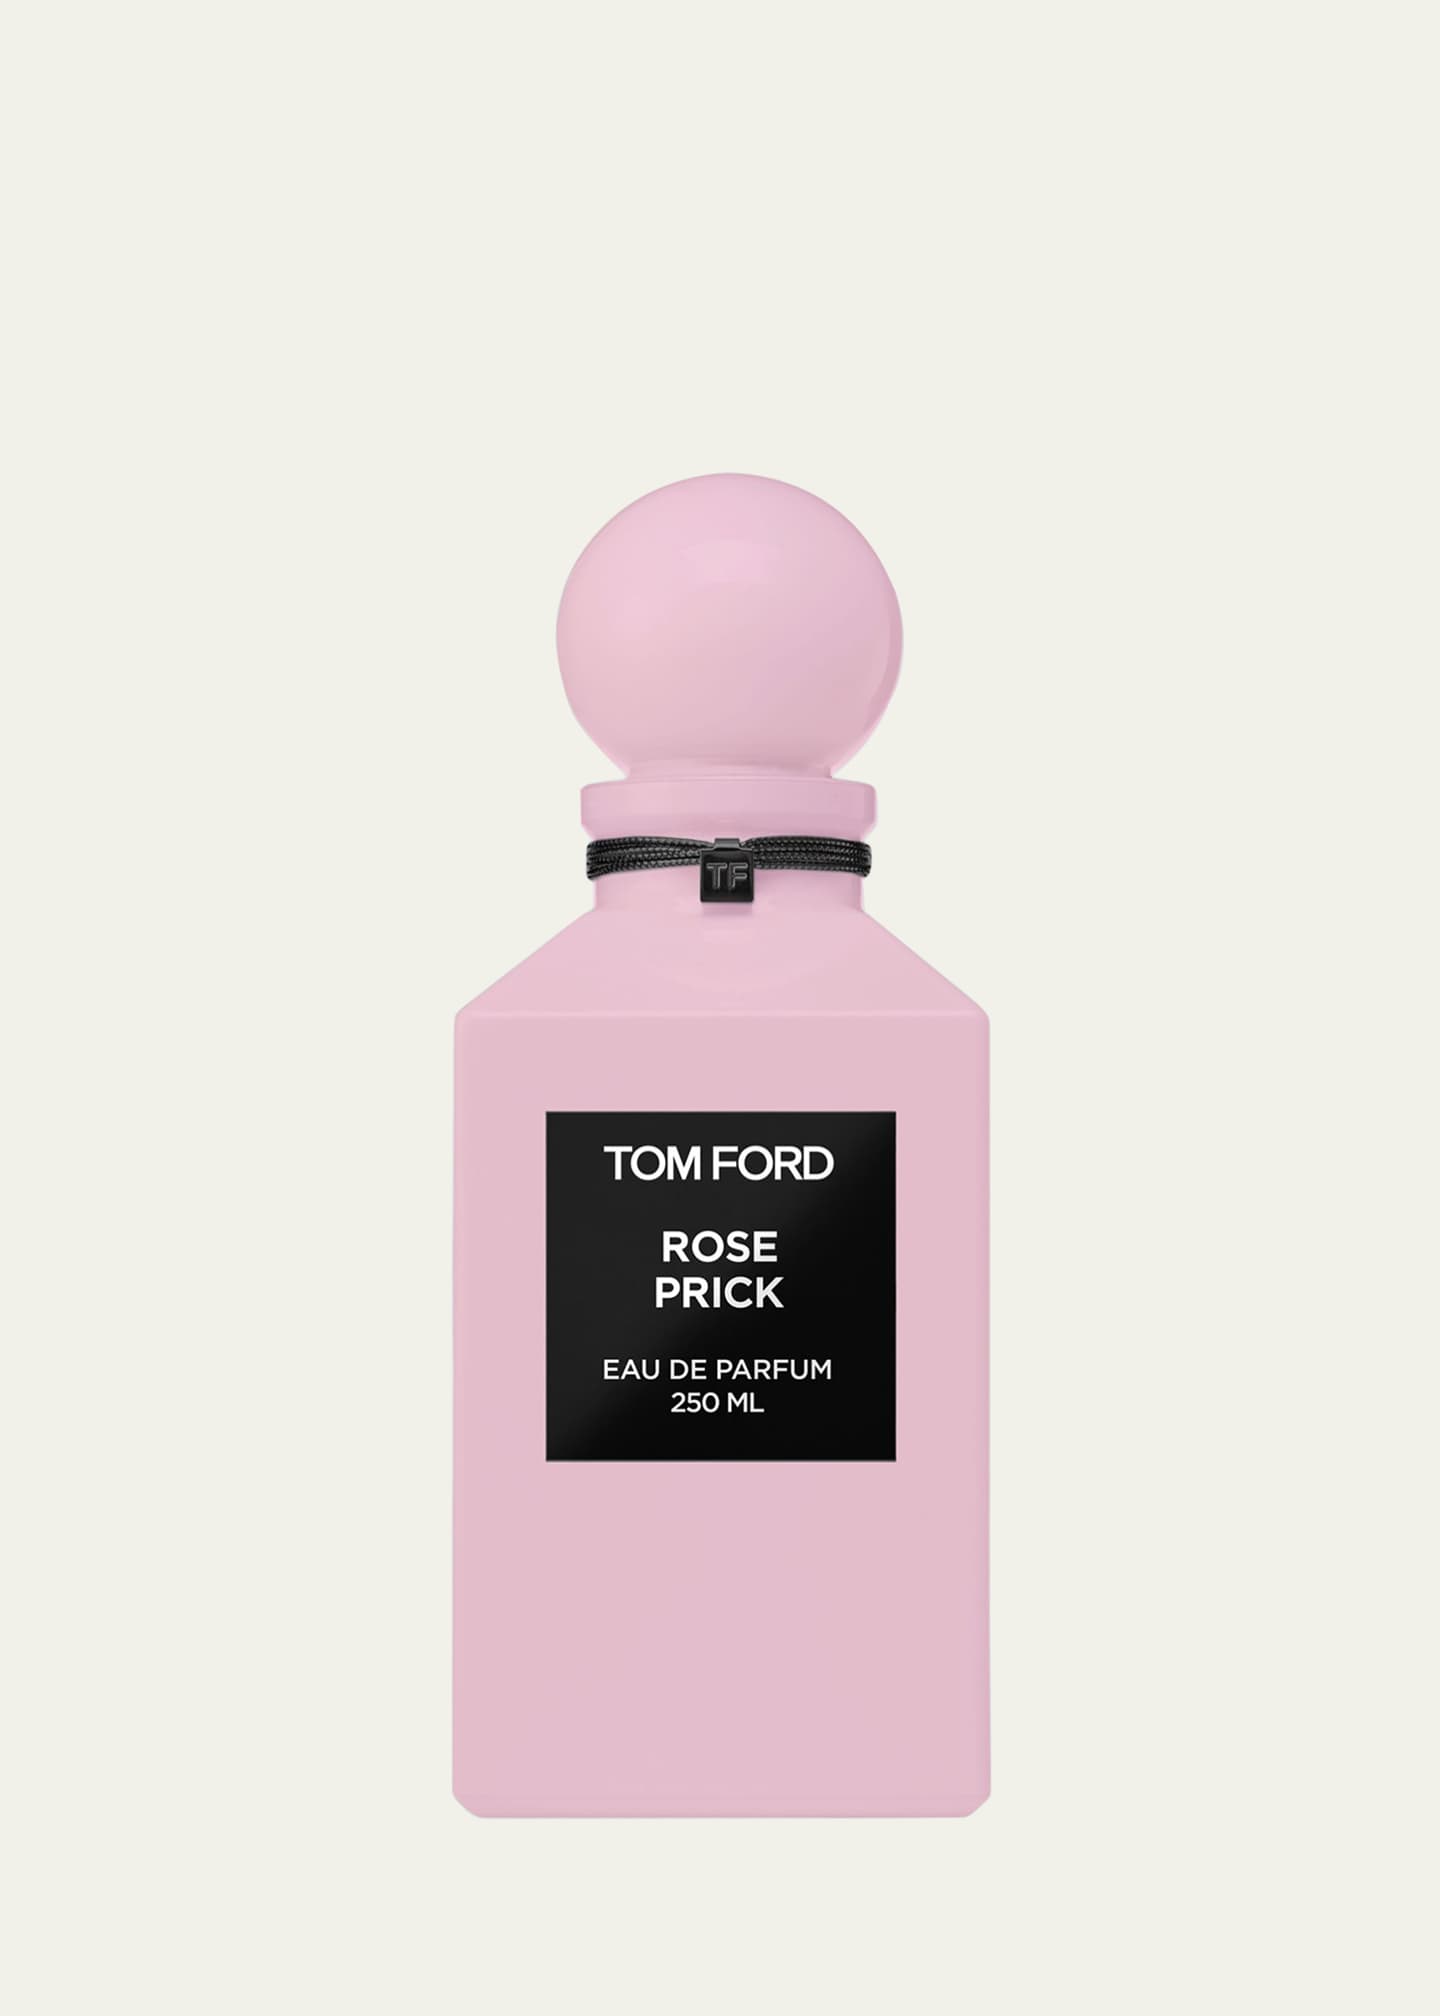 TOM FORD Rose Prick Eau de Parfum Fragrance 250ml Decanter Image 1 of 4